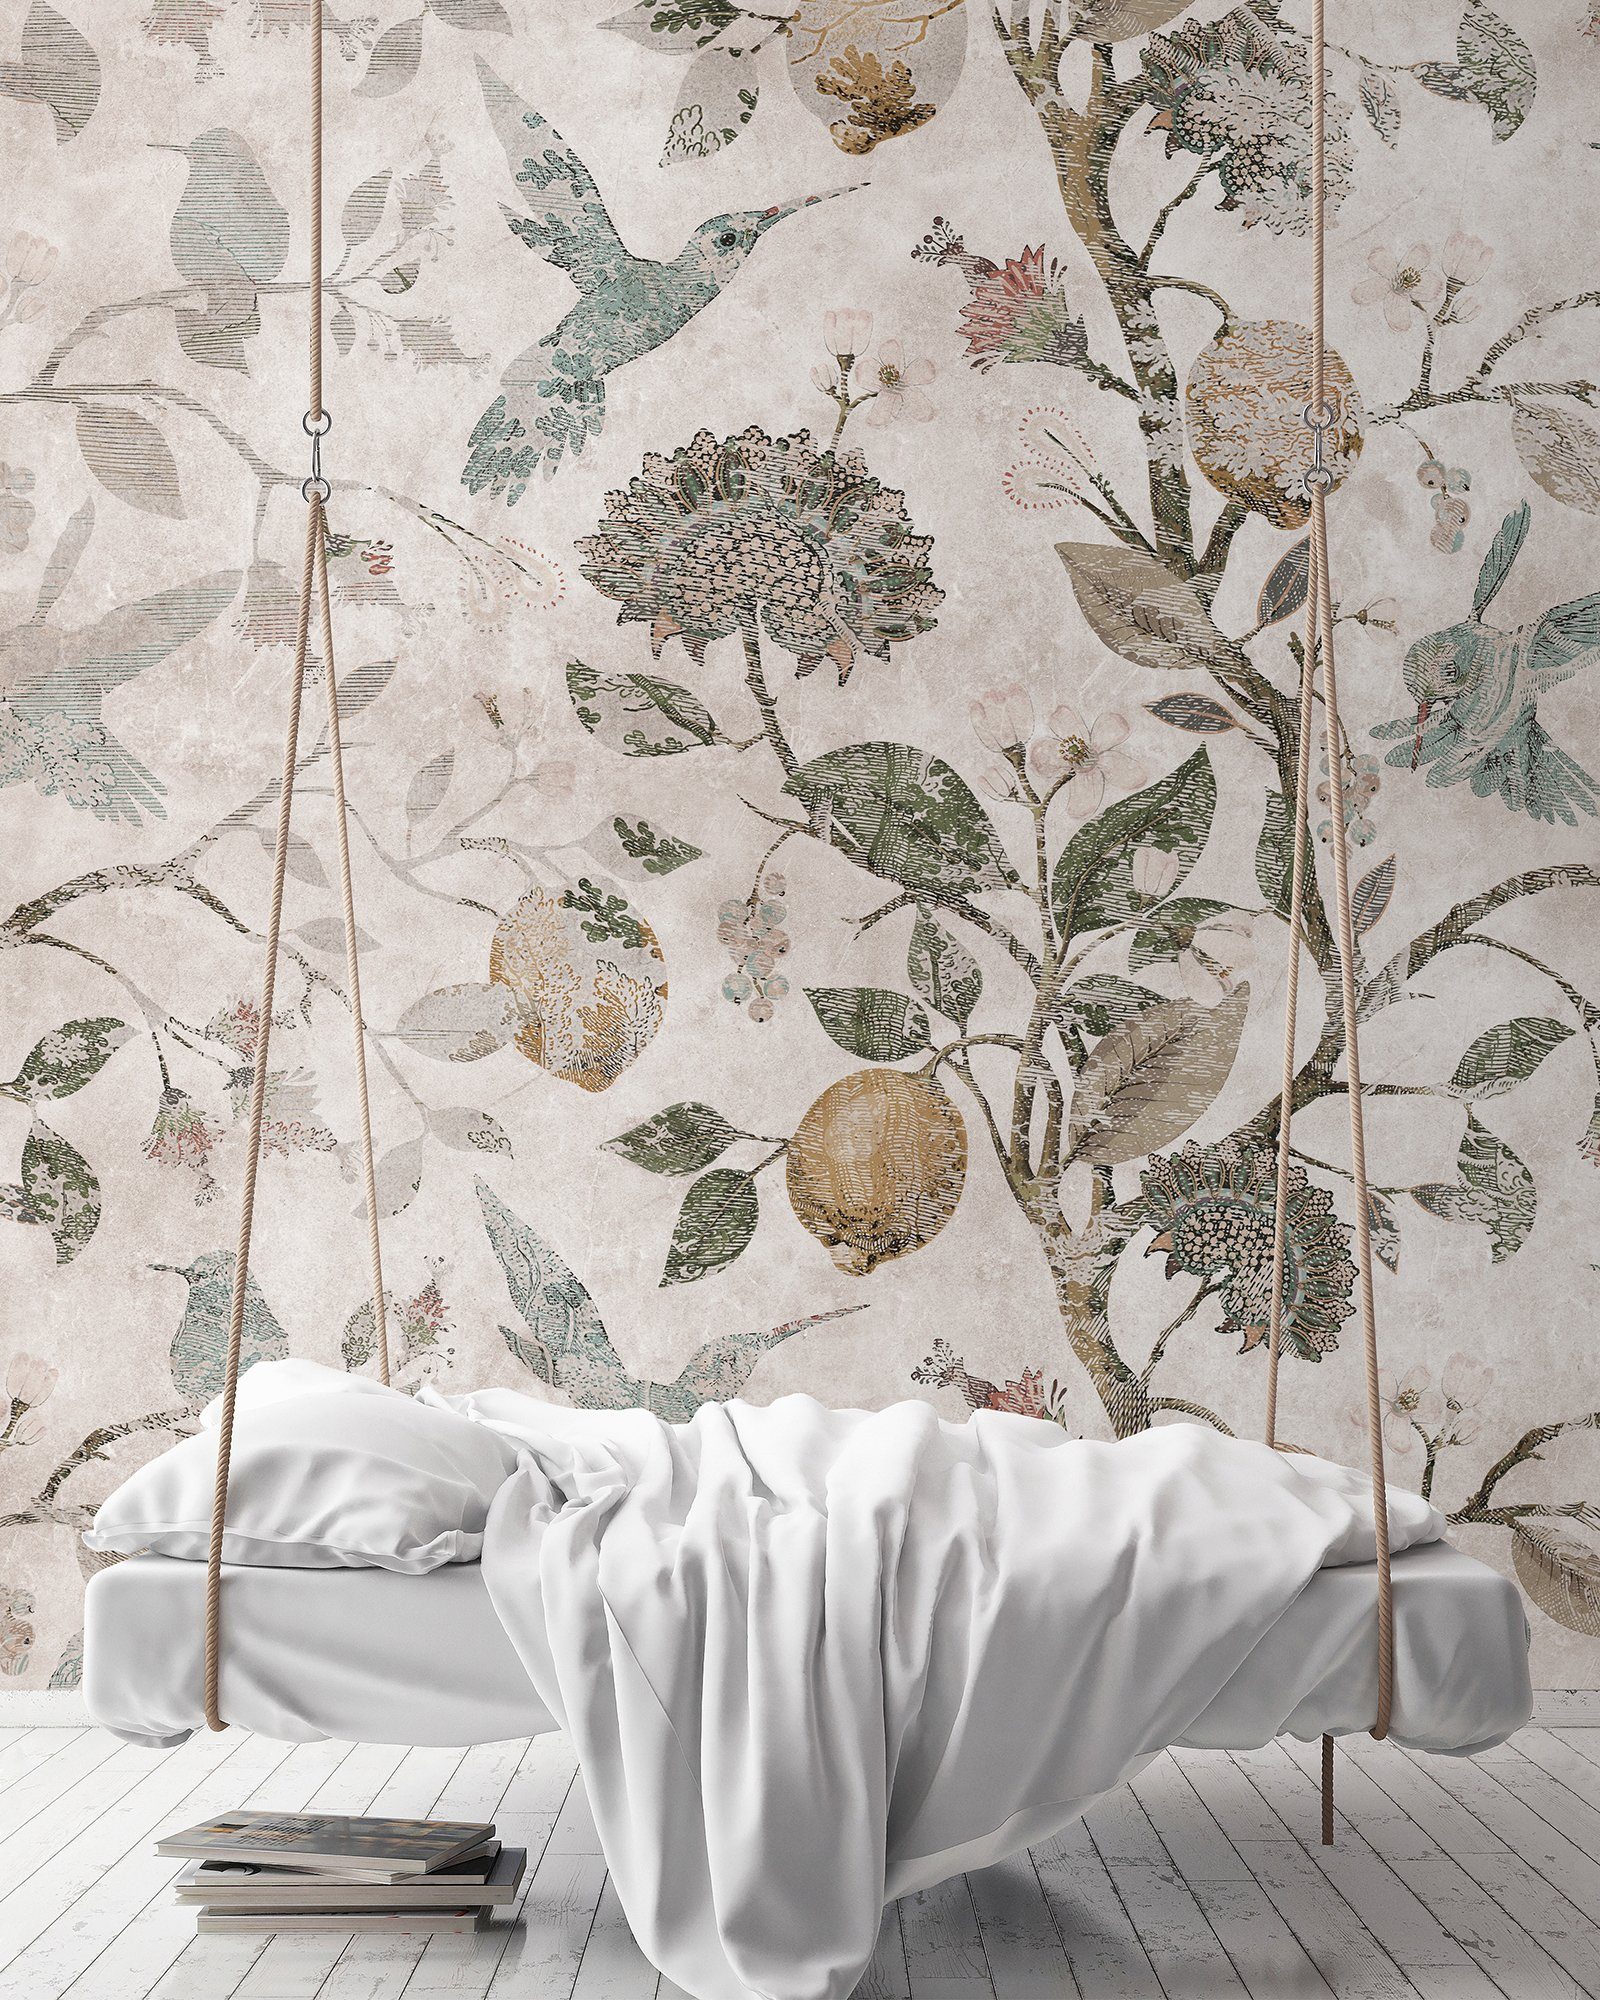 Fototapete Vlies, Wand The glatt, beige-braun by Walls Lemontree, Patel living In walls